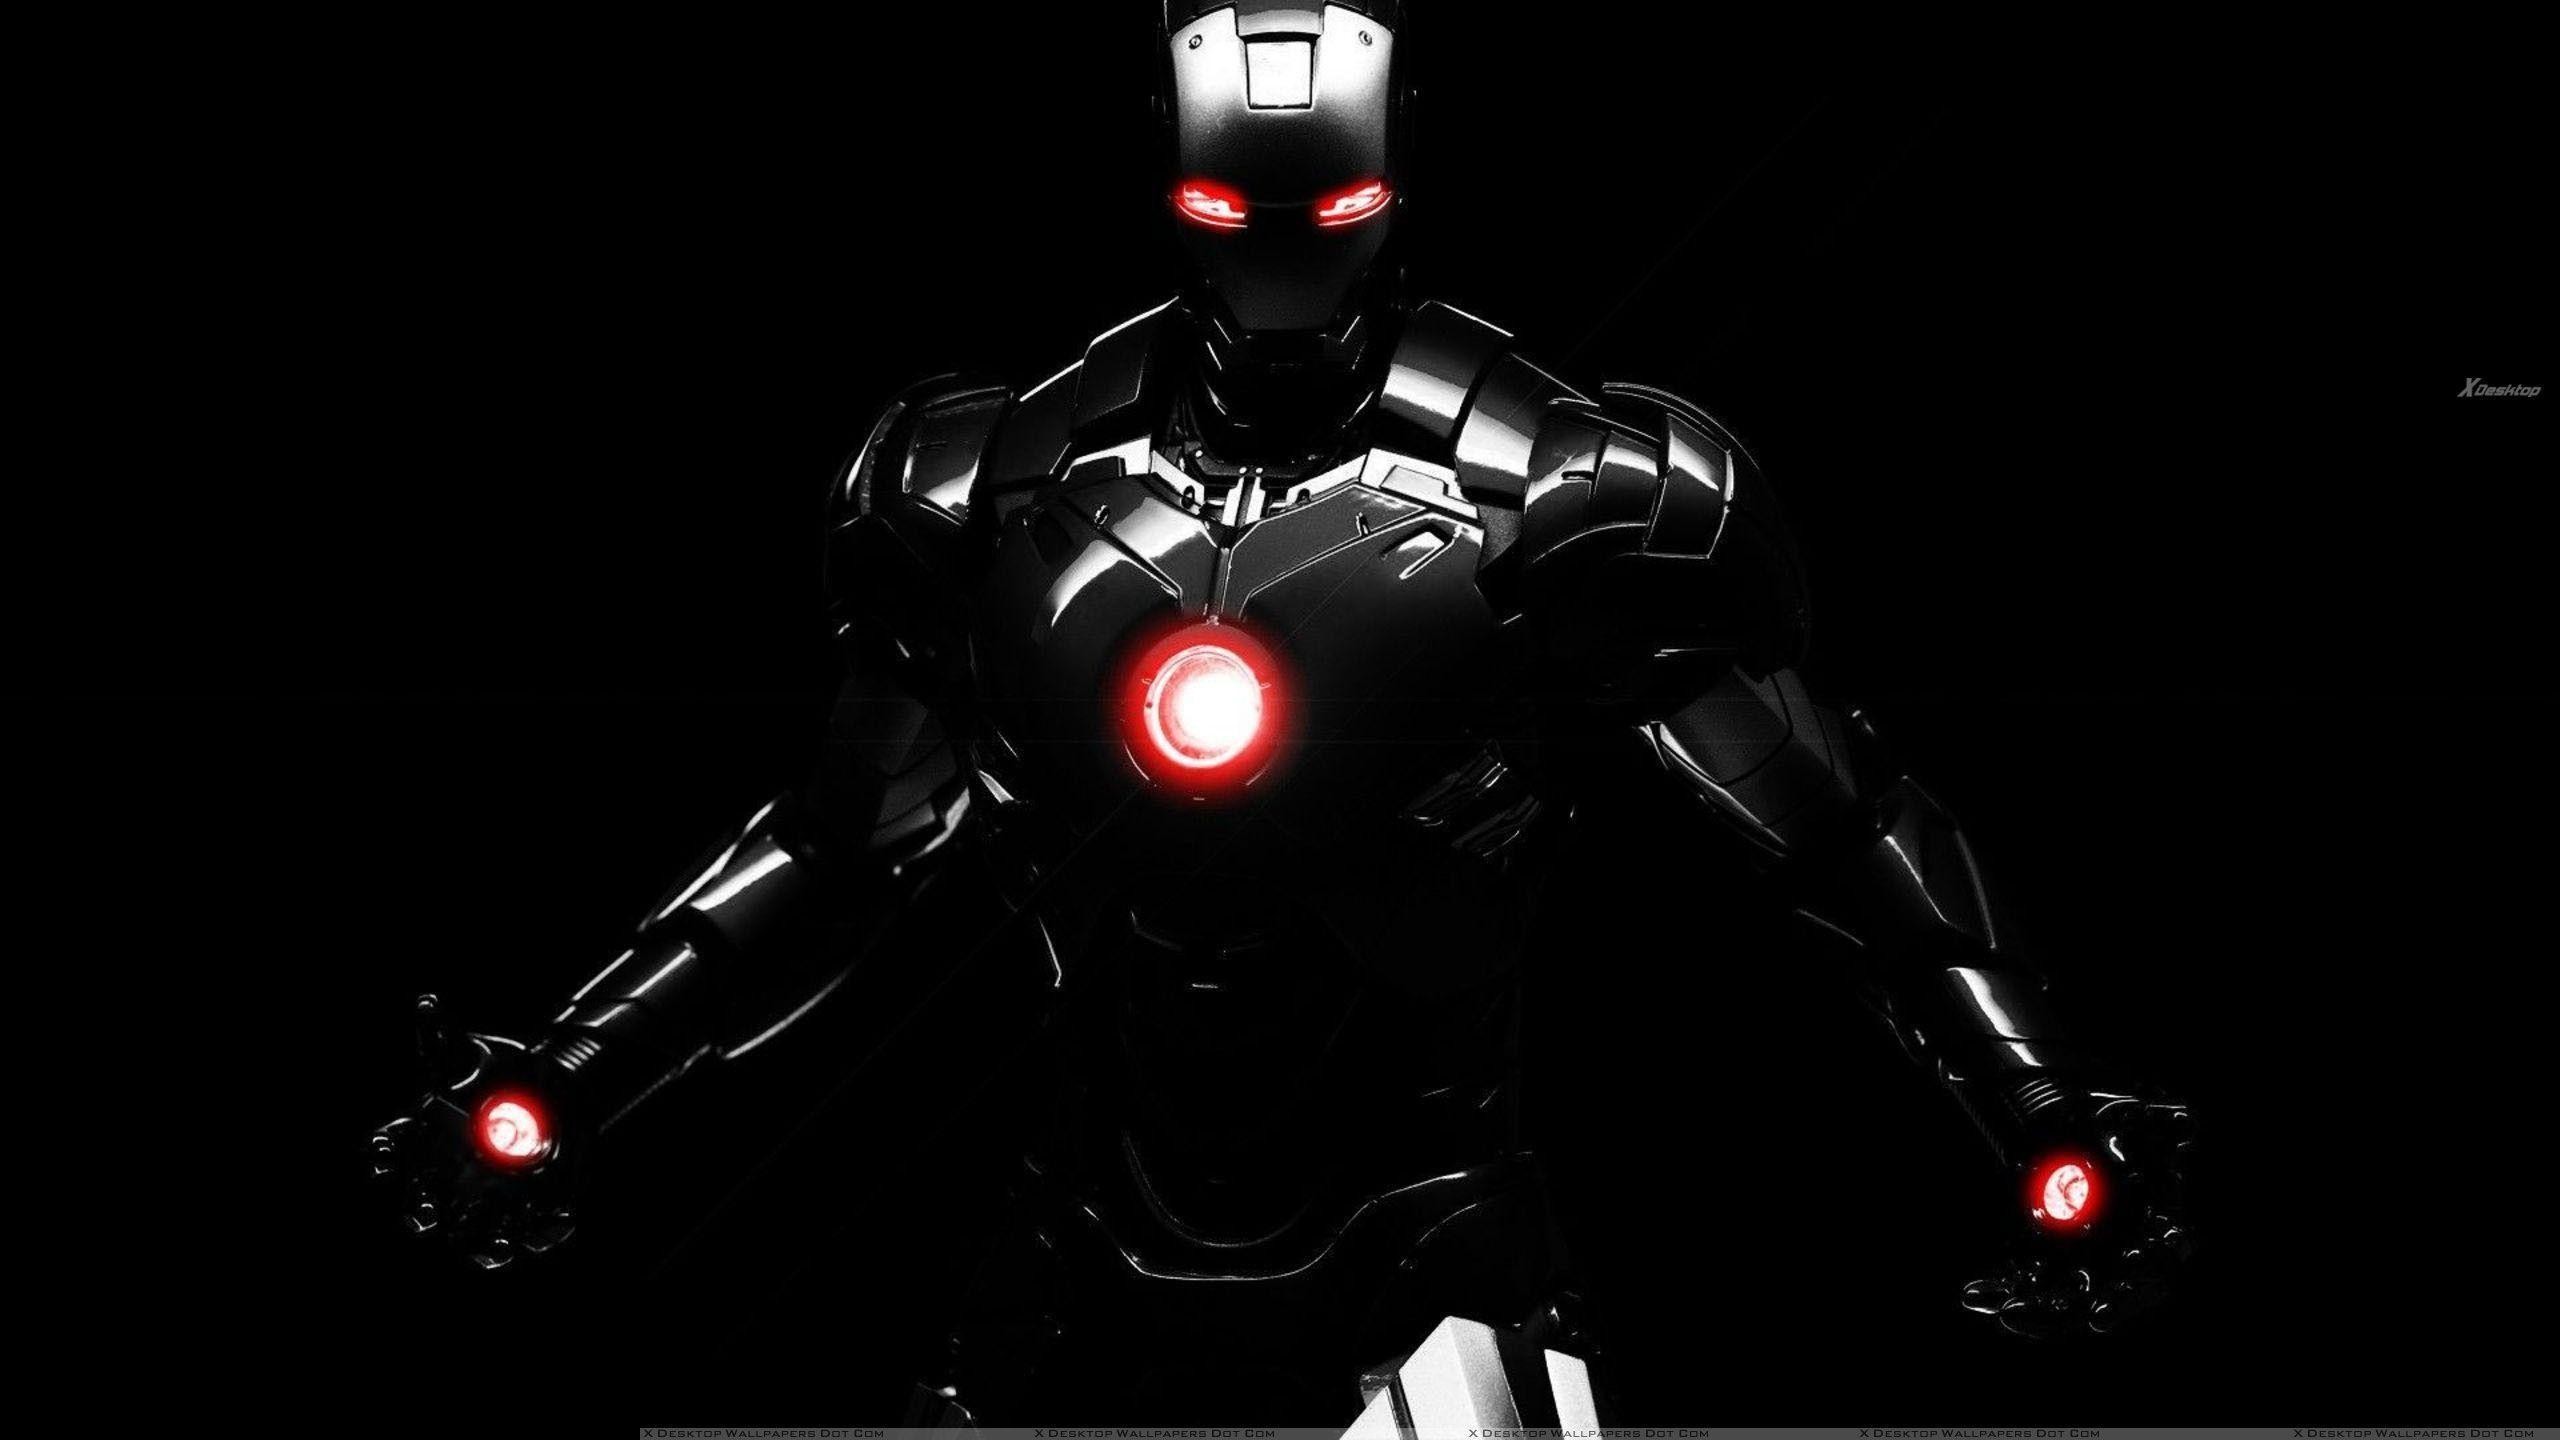 2560x1440 Iron Man Suits Wallpaper - WallpaperSafari